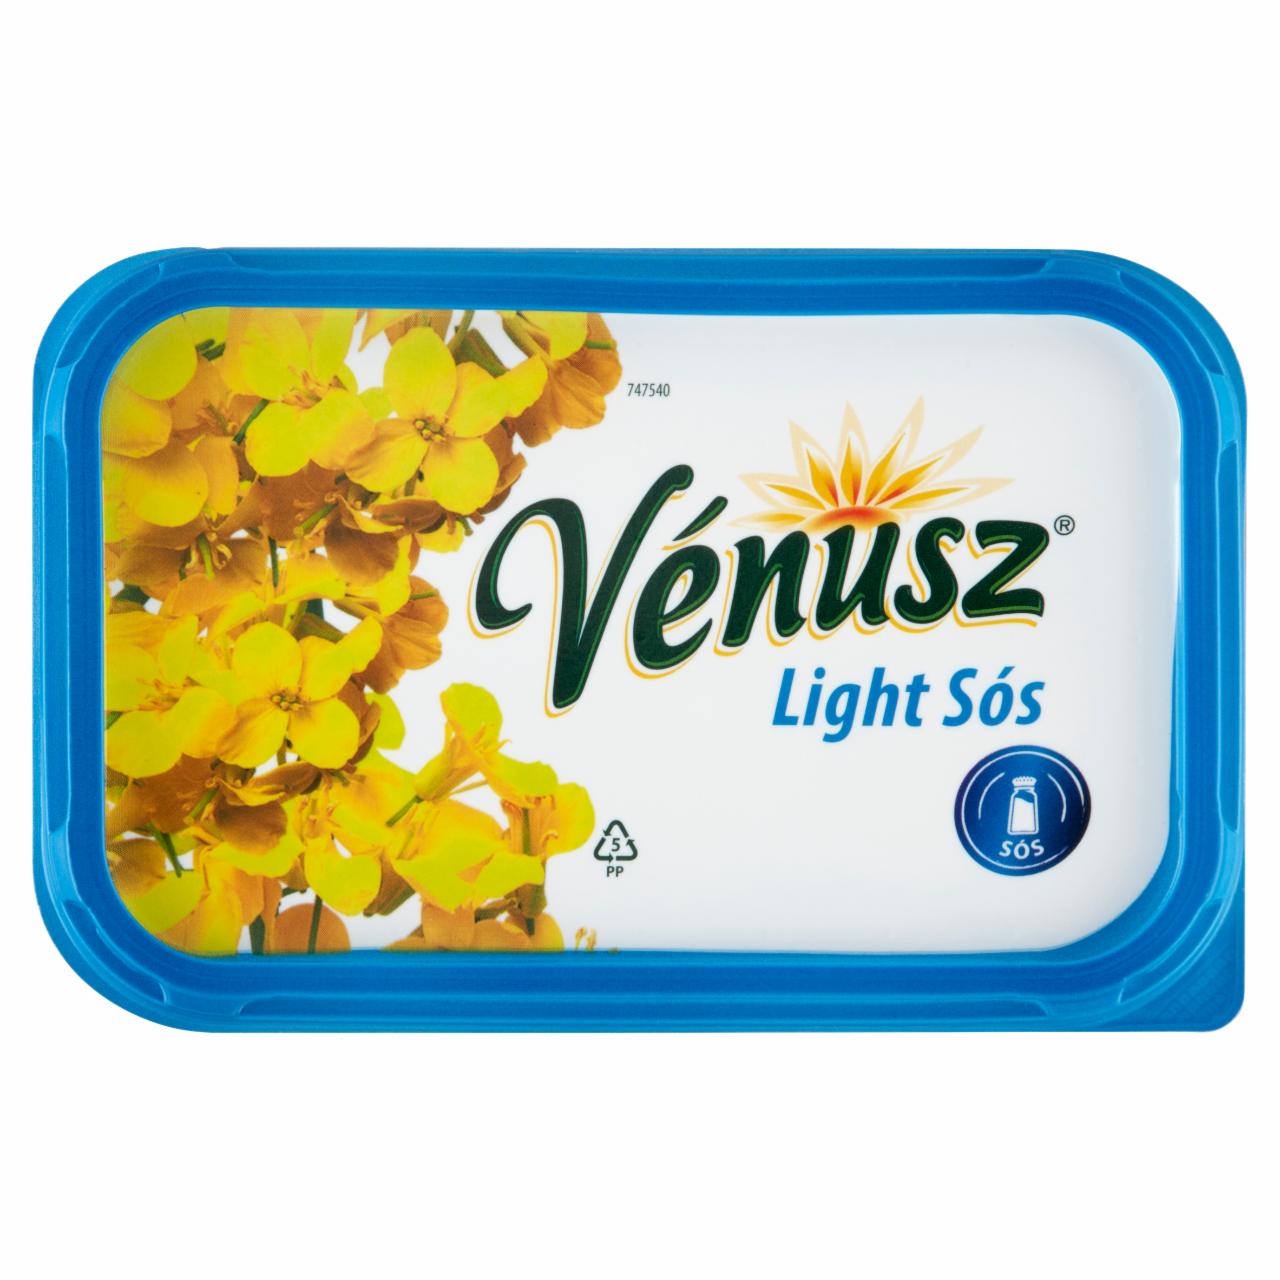 Képek - Light Sós 32% zsírtartalmú margarin Vénusz